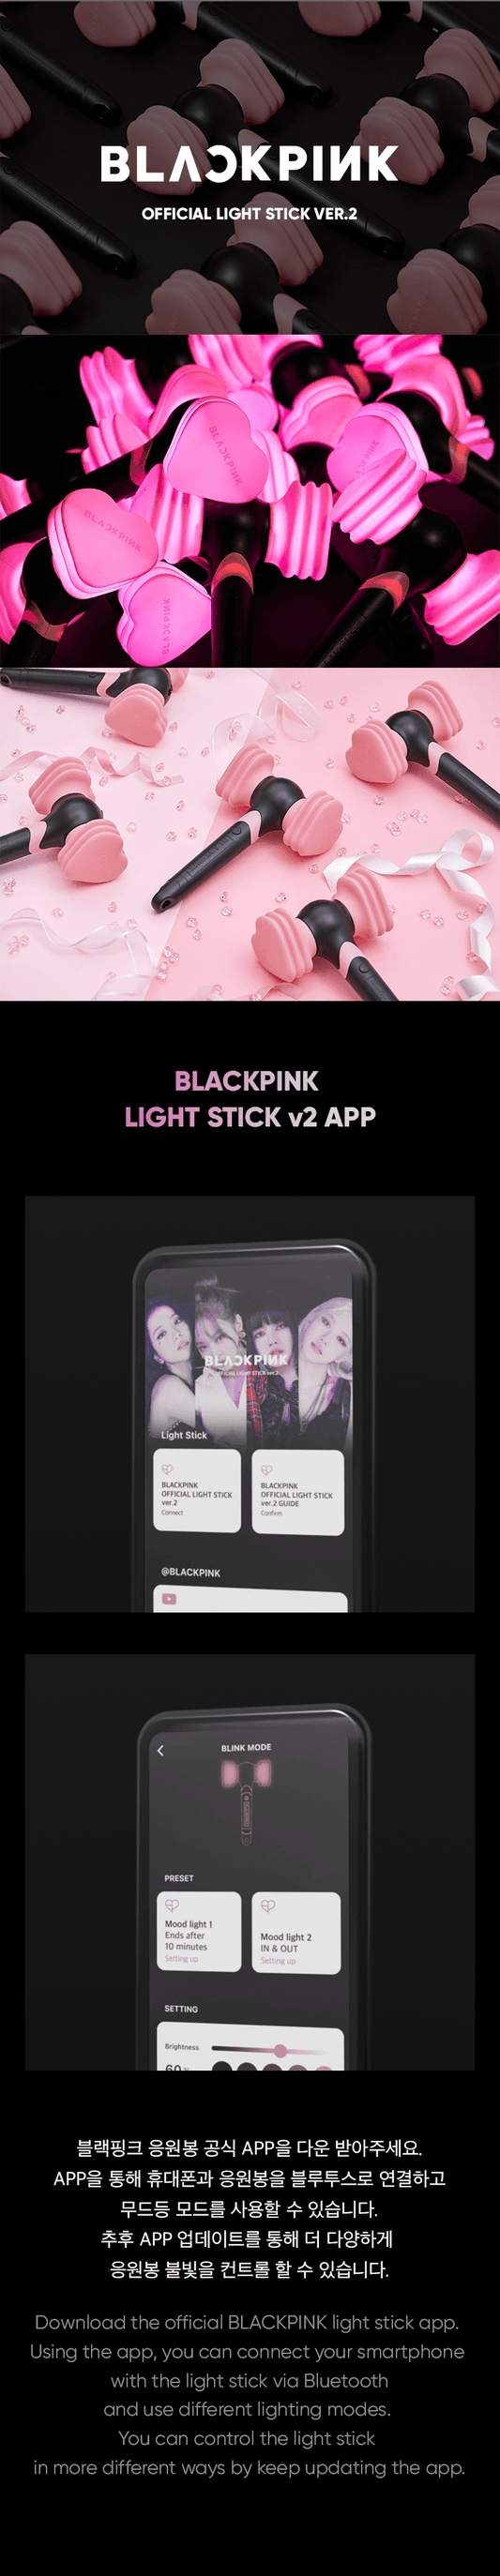 BLACKPINK OFFICIAL LIGHT STICK Ver 2